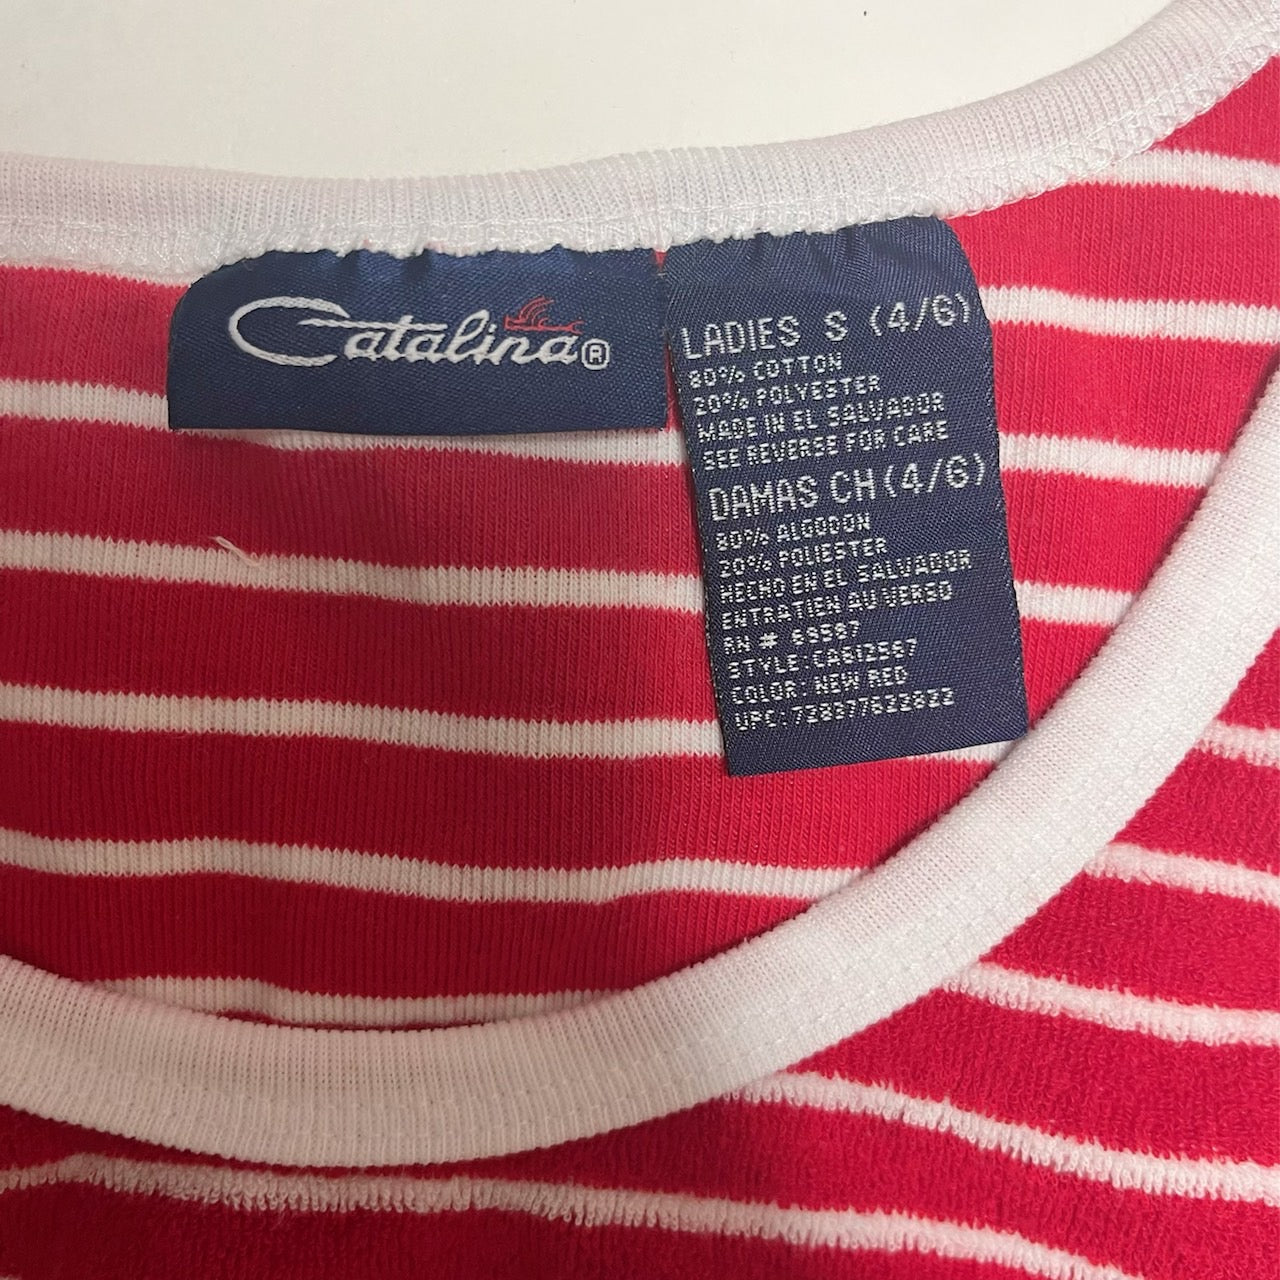 catalina vintage Pile Fabric tank tops (women's S)